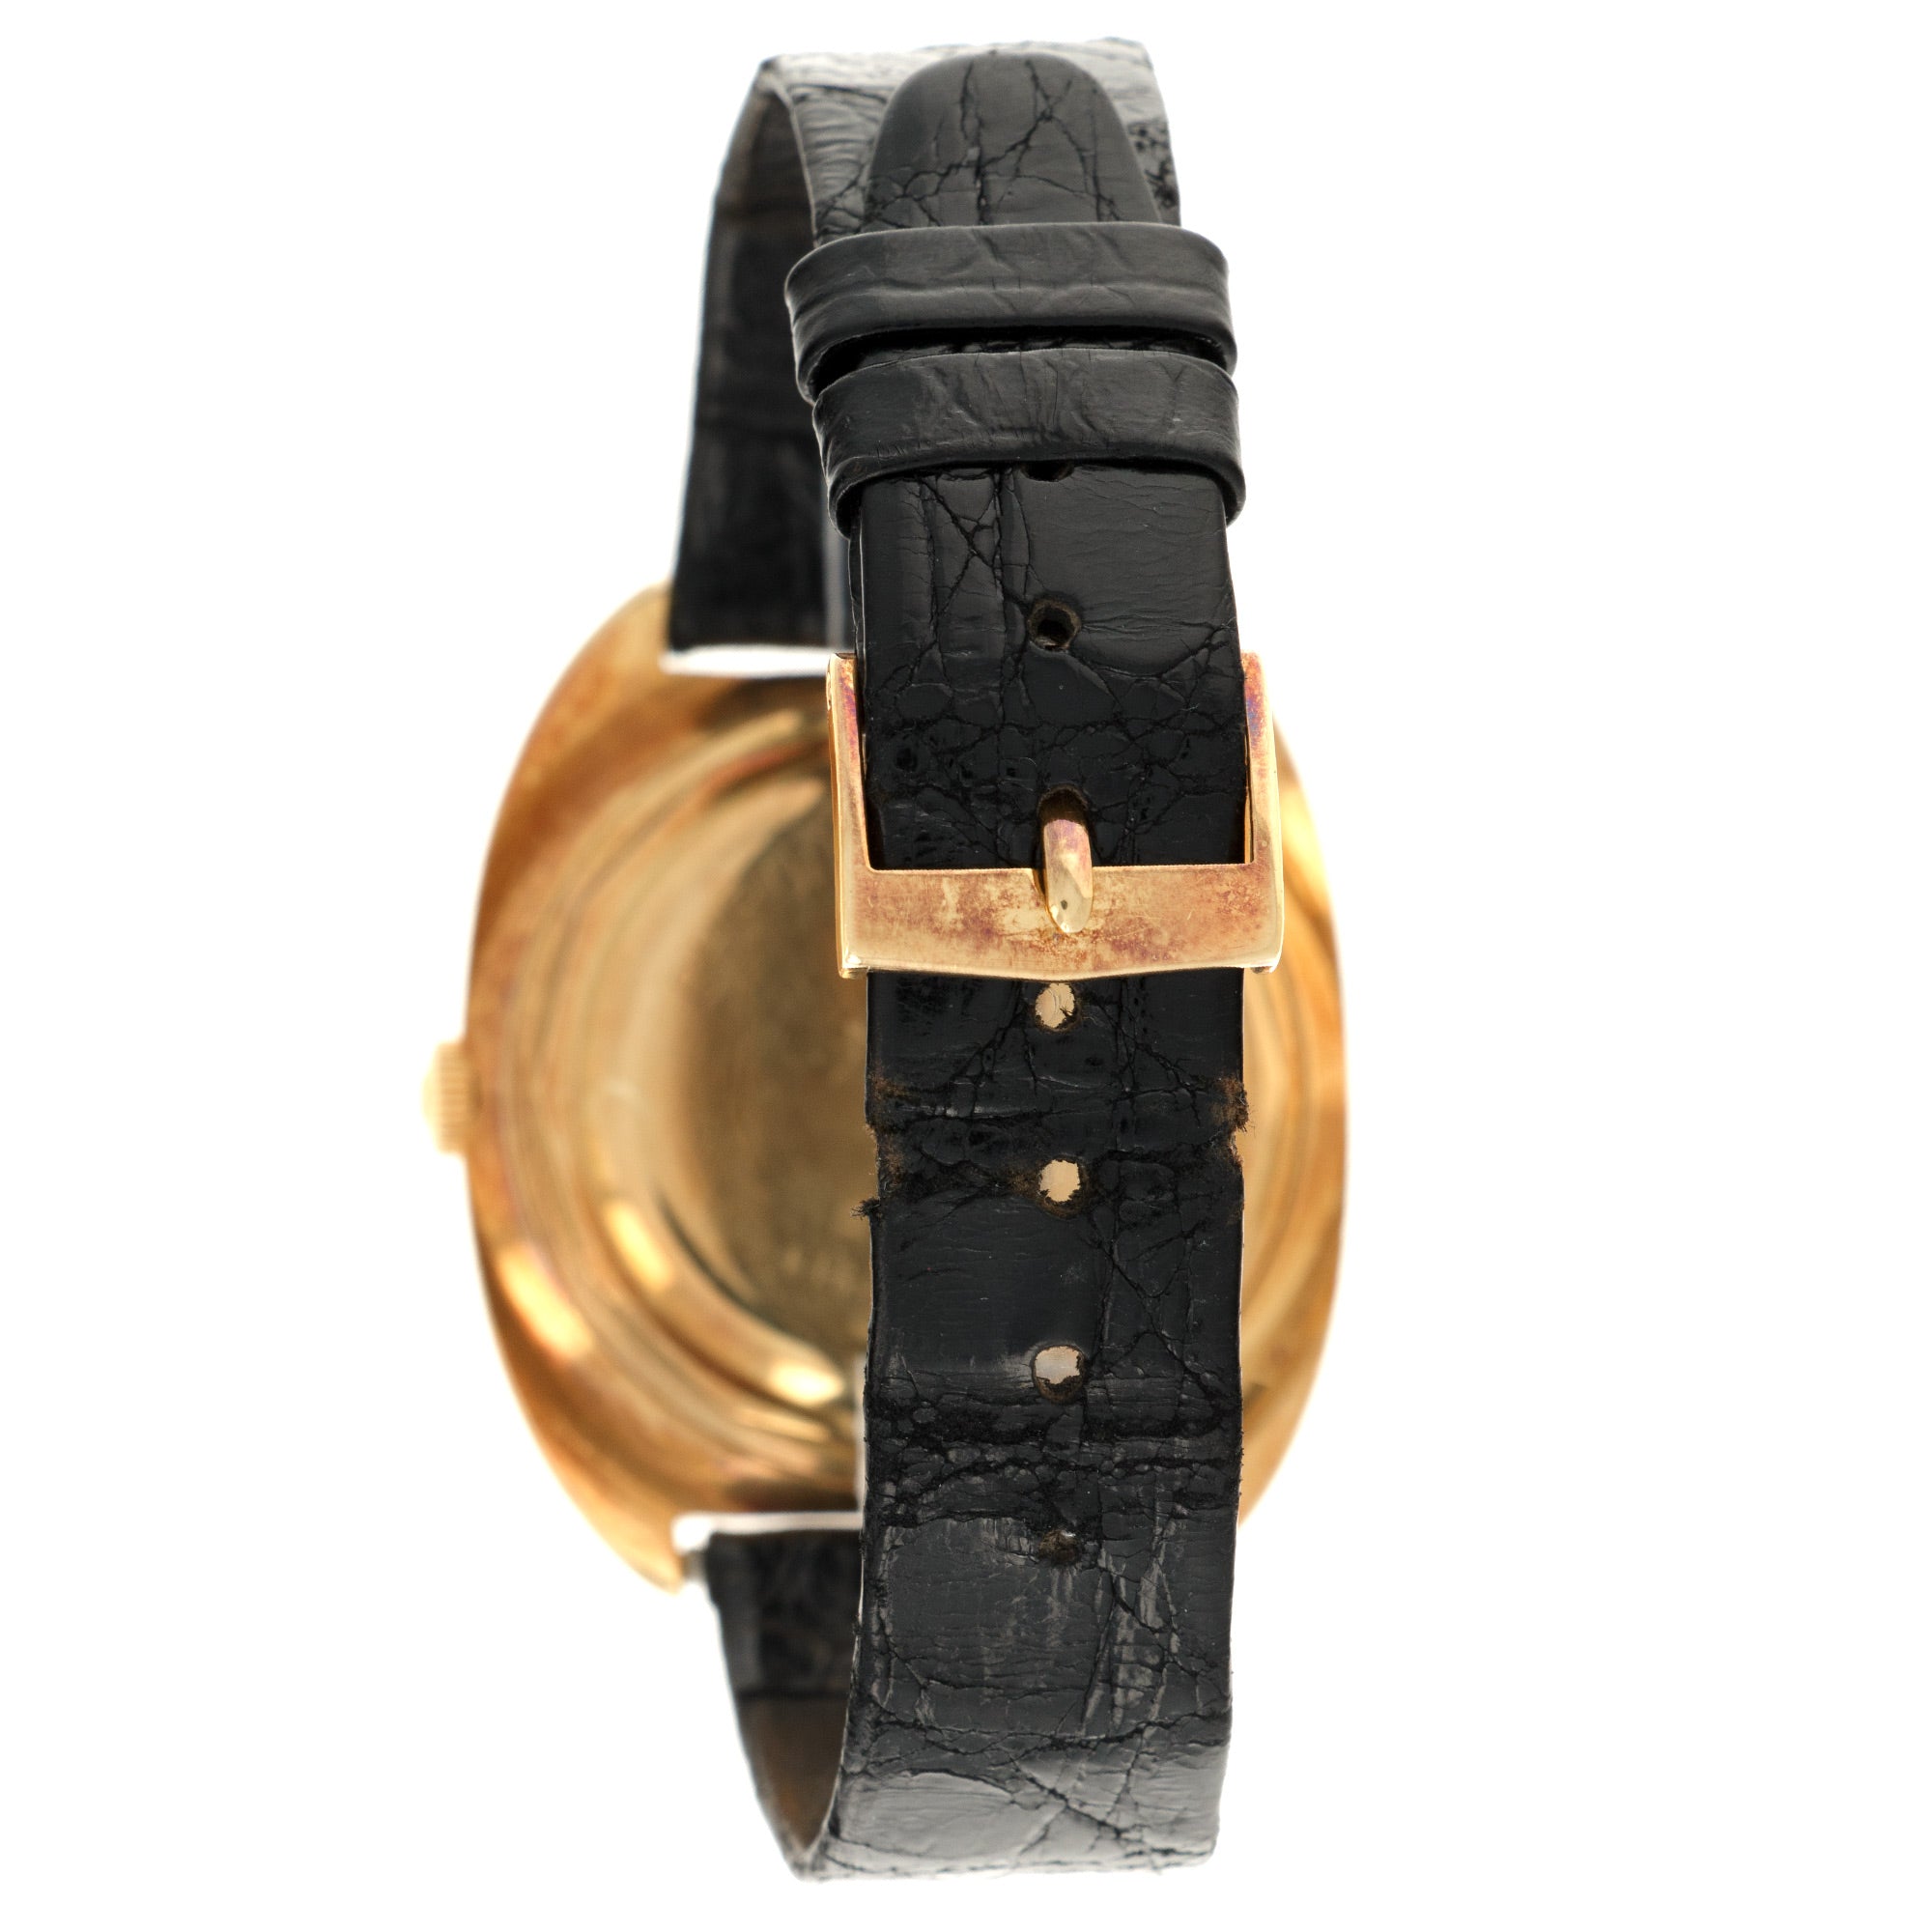 Vacheron Constantin - Vacheron Constantin Yellow Gold Royal Chronometer Watch - The Keystone Watches